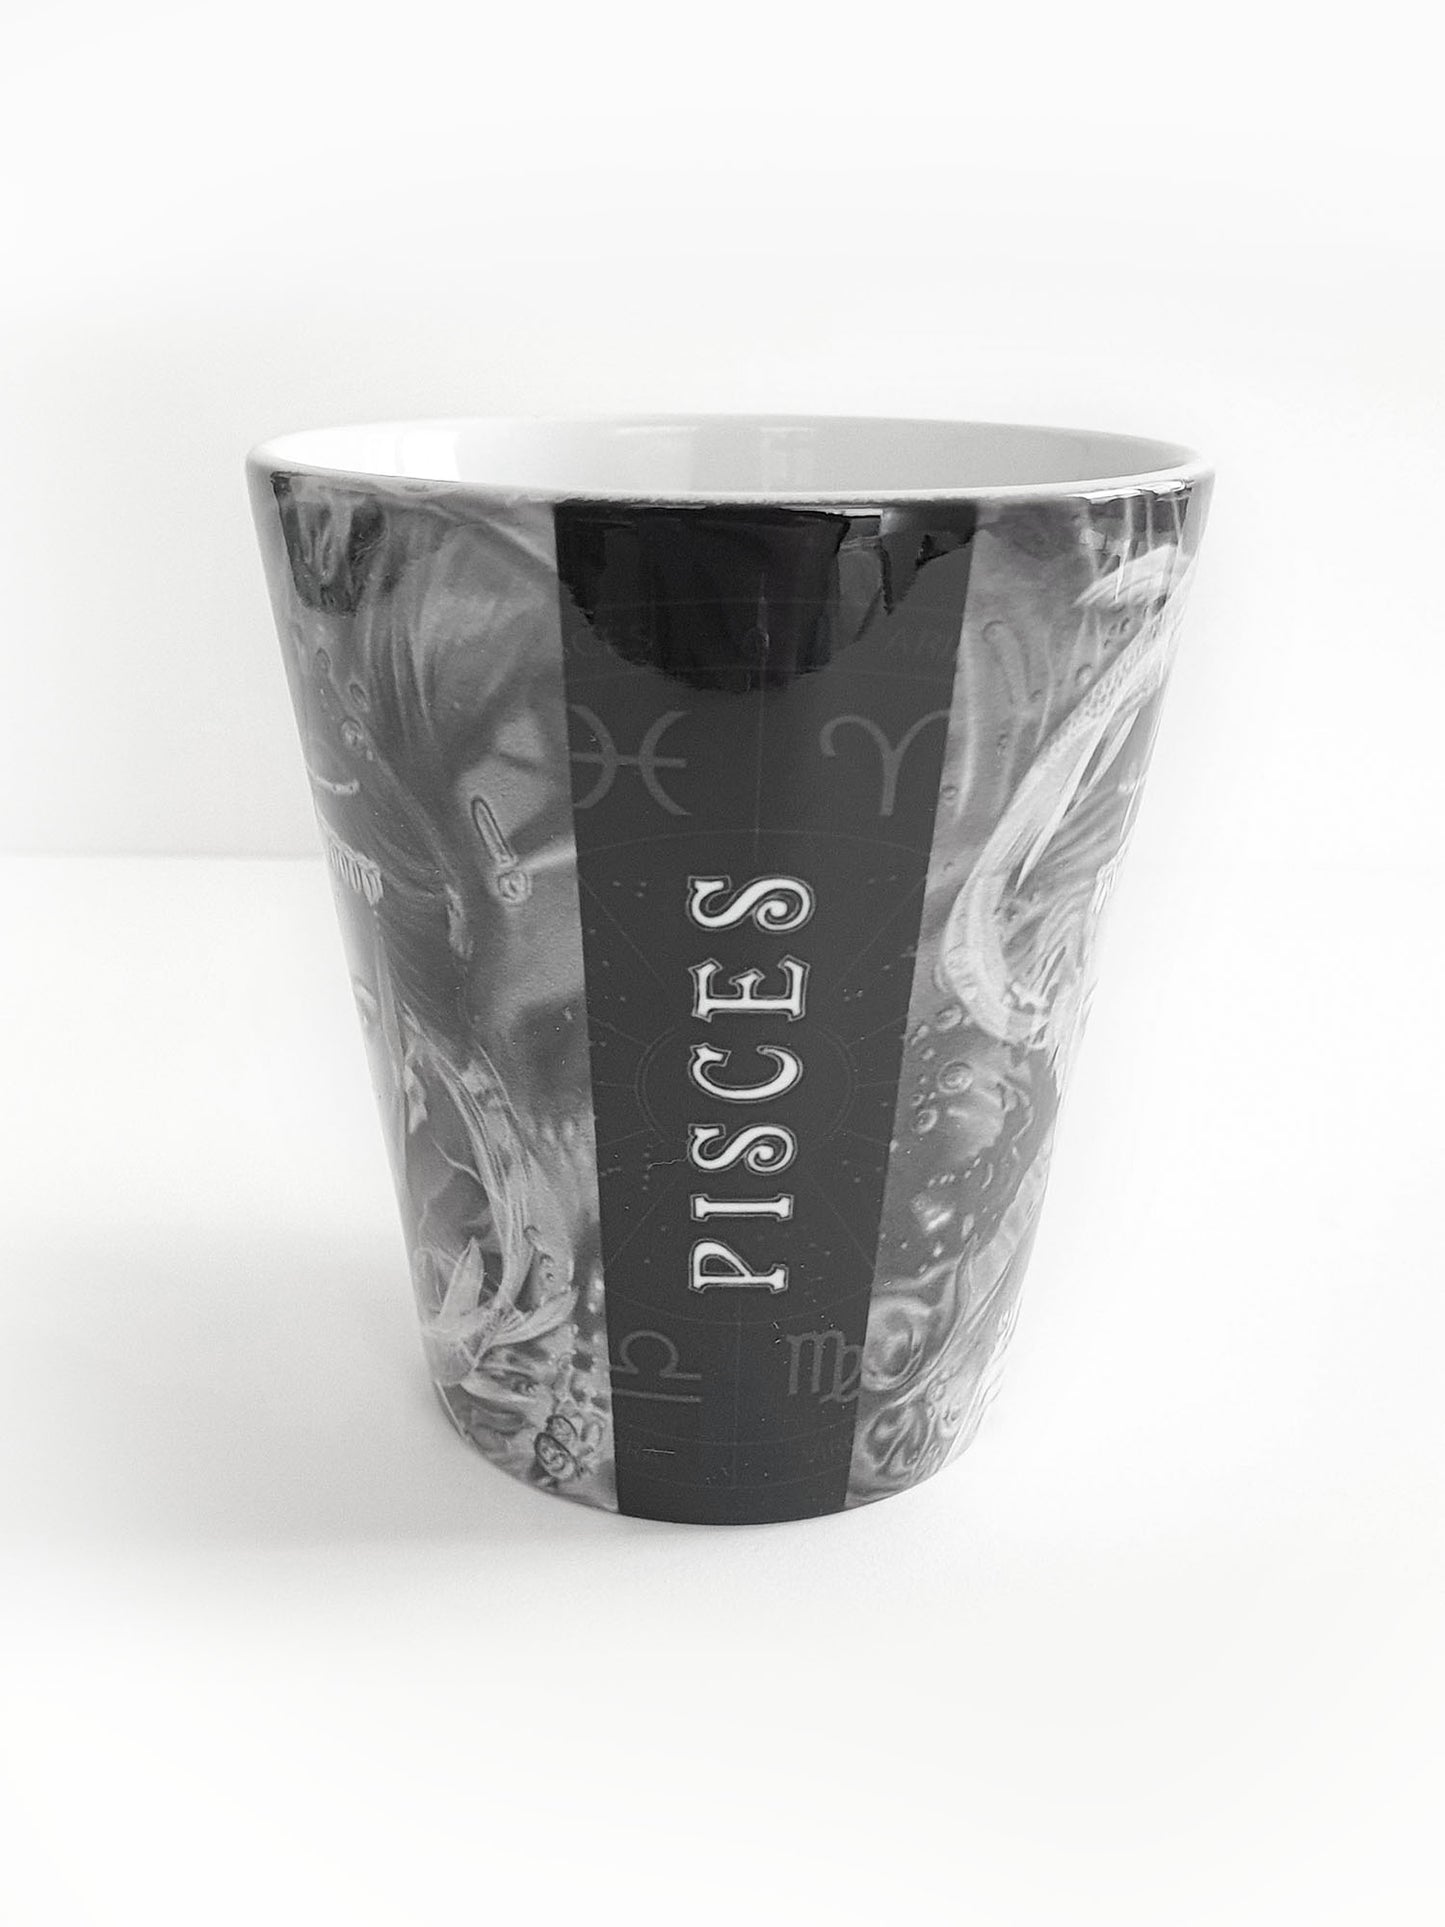 'Pisces' ceramic mug